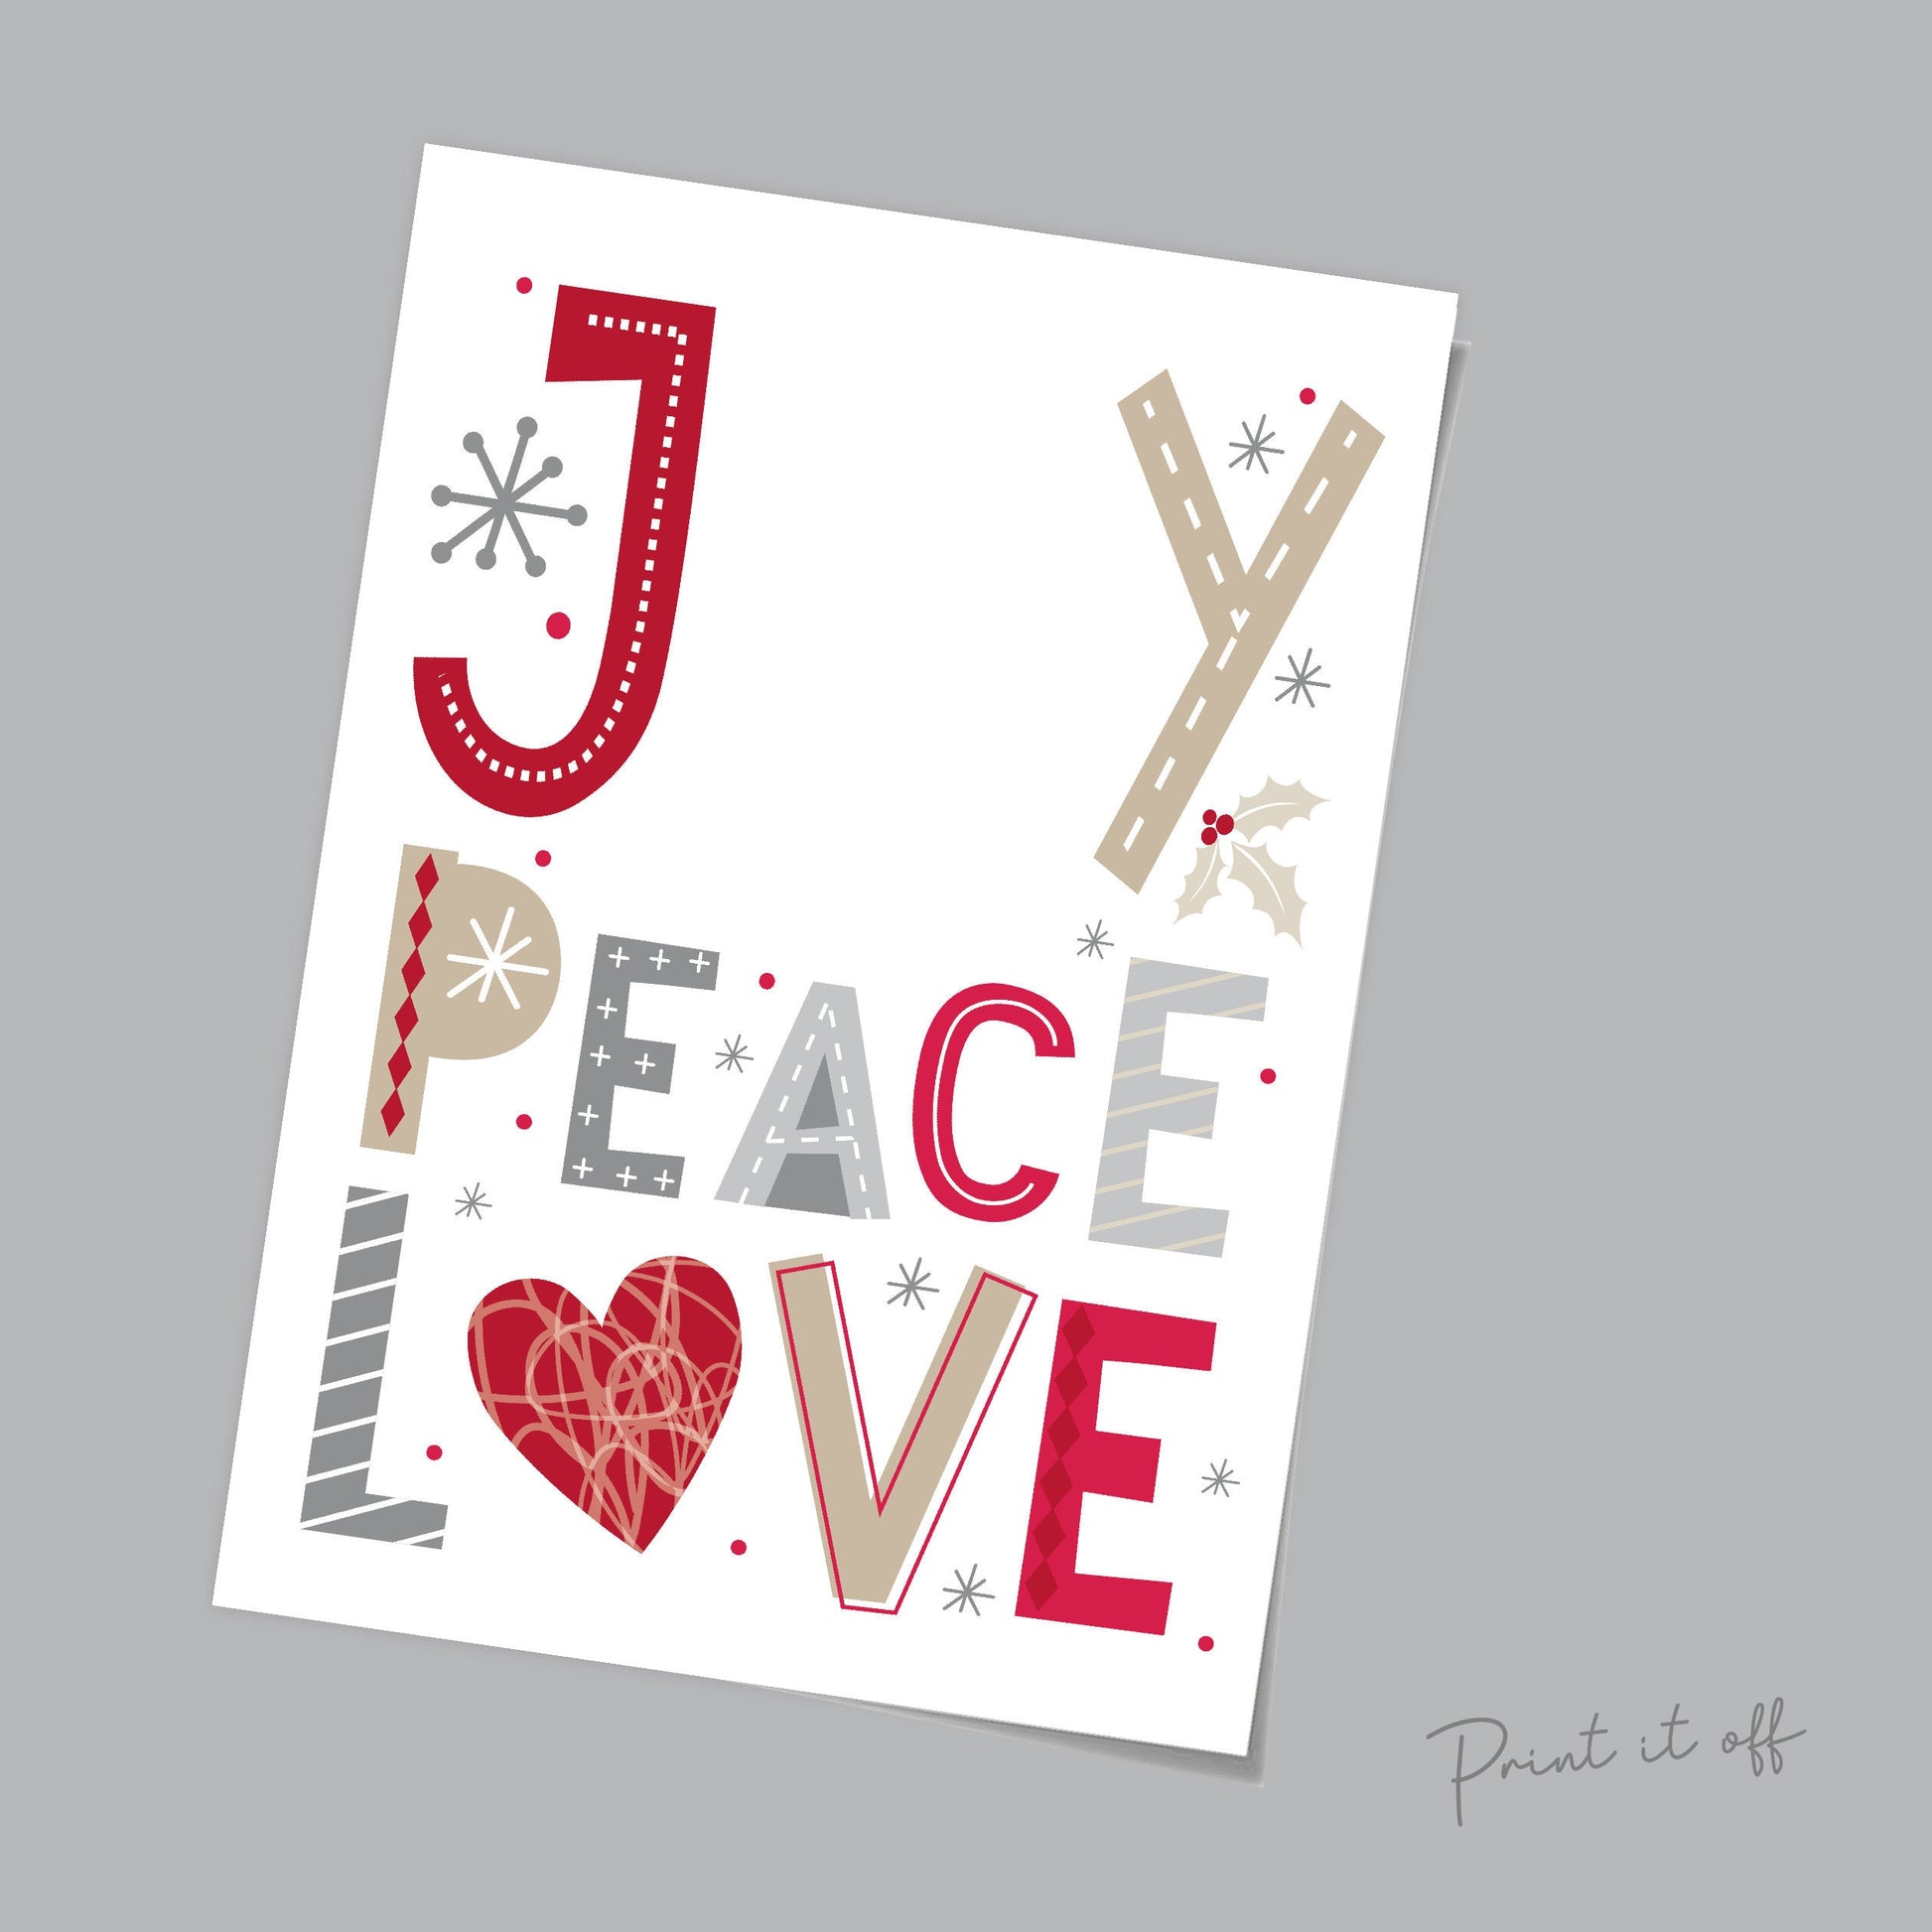 Joy Peace Love Christmas Handprint Xmas Art Craft Baby Toddler Hand DIY Keepsake Gift Card Printable - Print It Off 0647